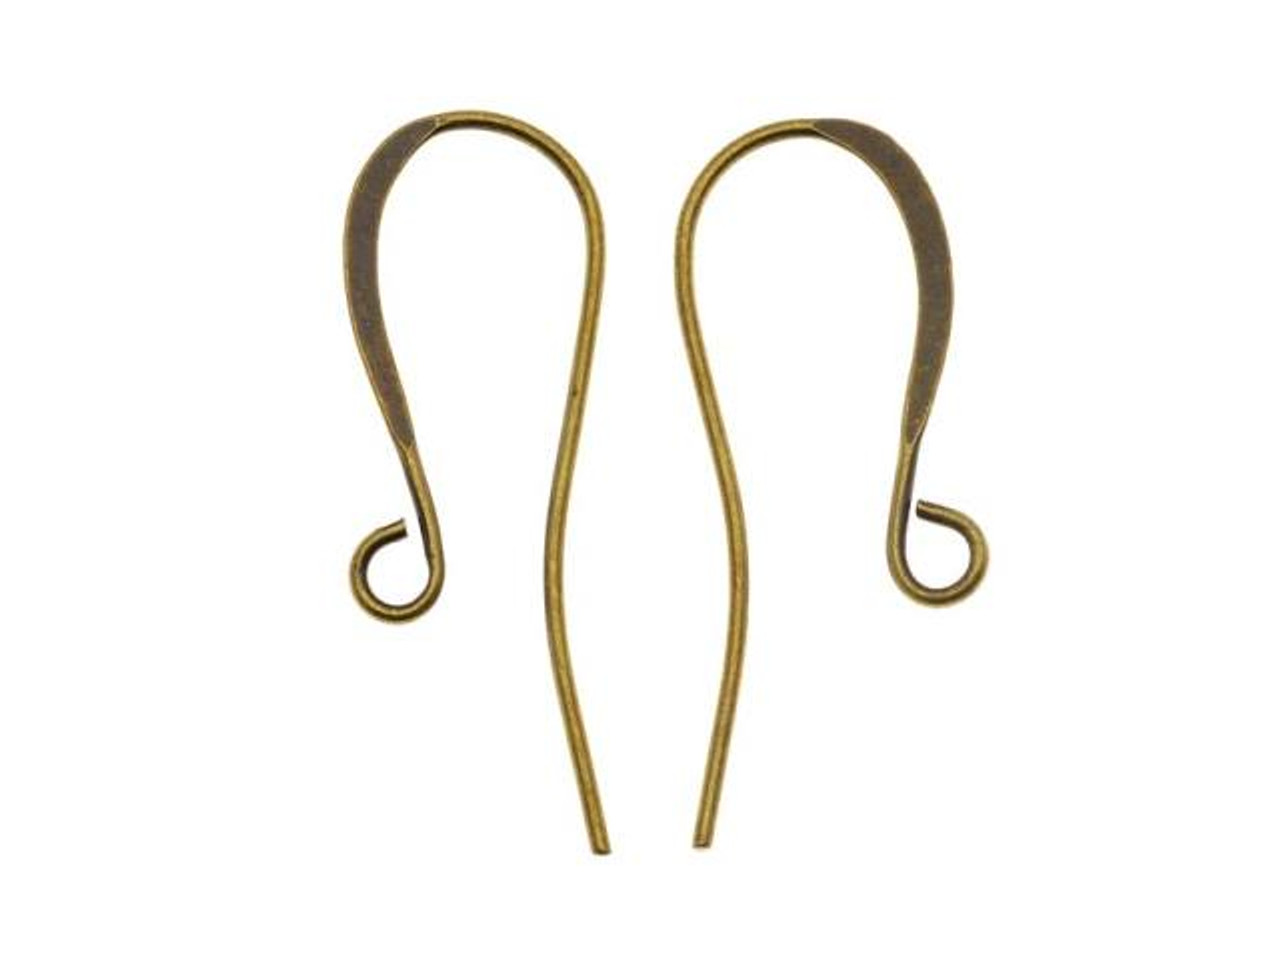 Earring Findings, Long Earring Hooks 25mm, Antiqued Brass (25